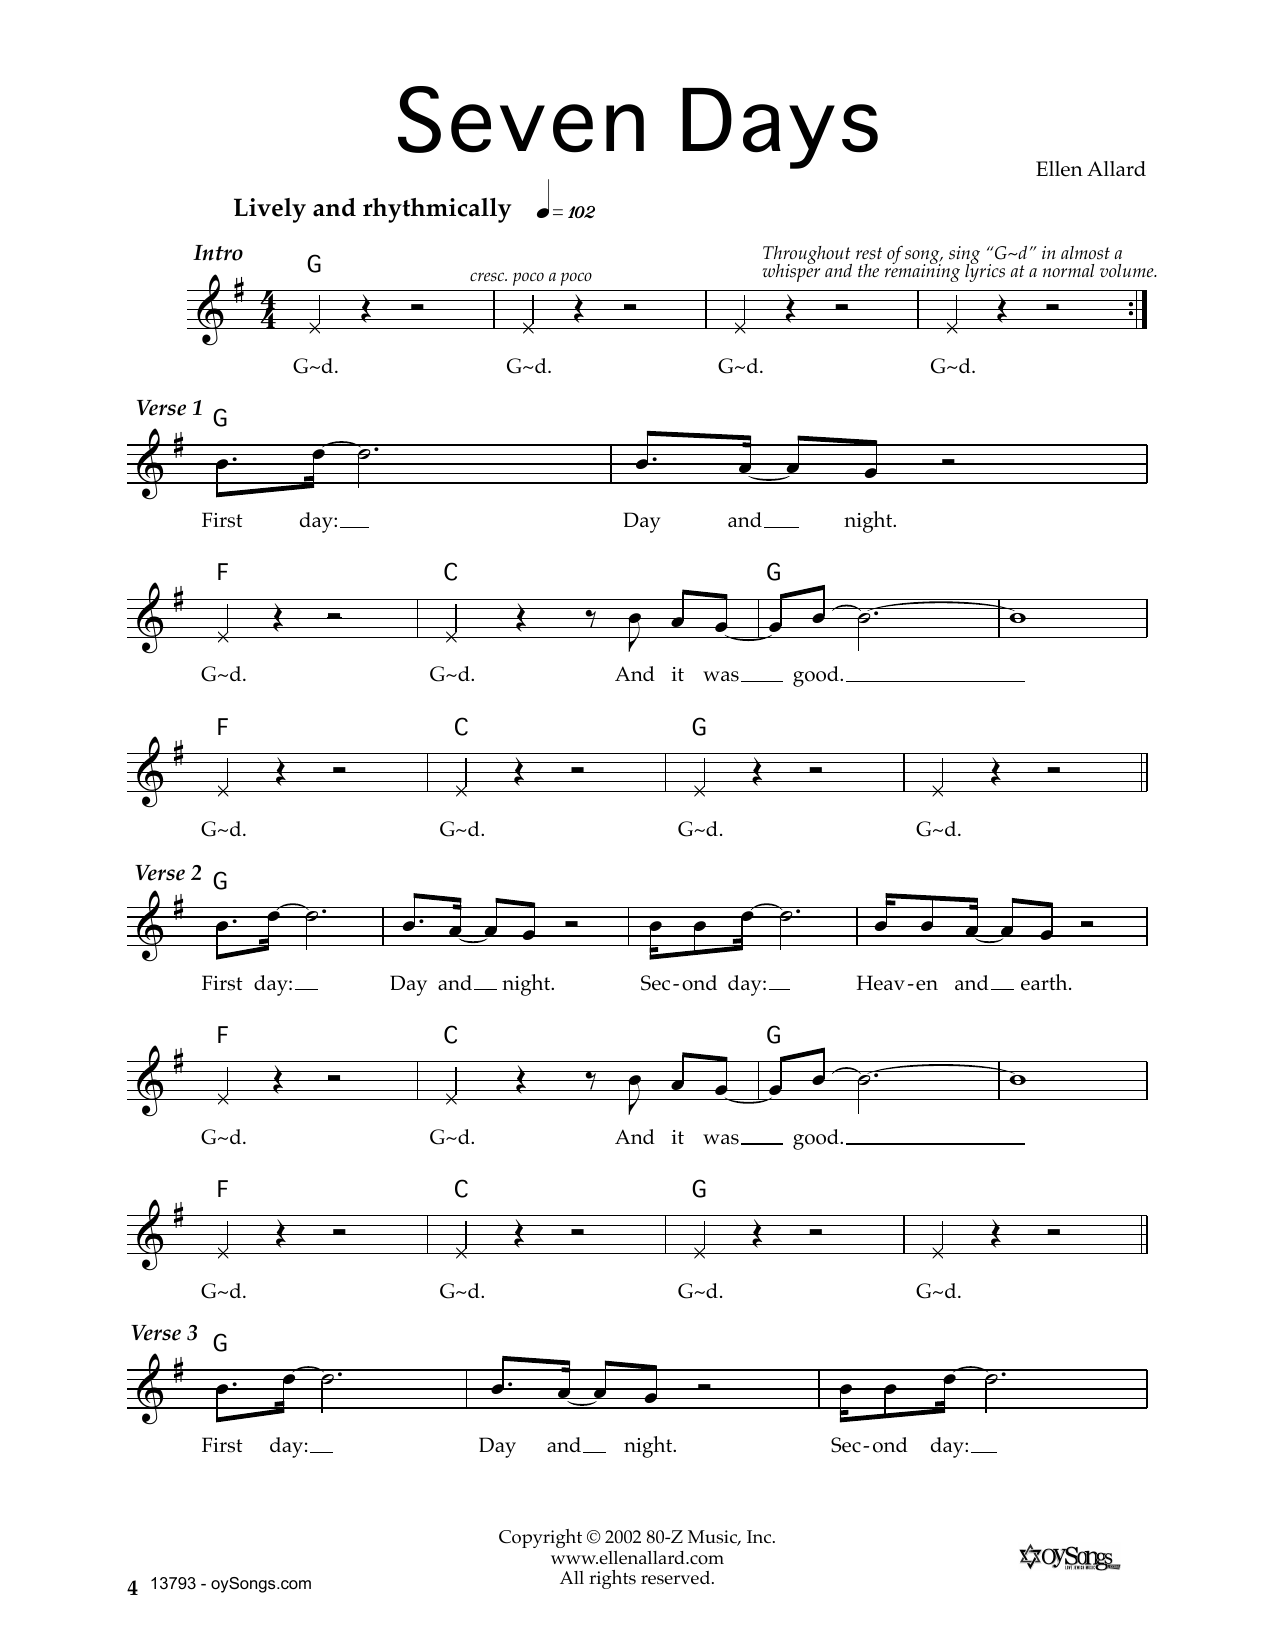 Ellen Allard Seven Days Sheet Music Notes & Chords for Melody Line, Lyrics & Chords - Download or Print PDF